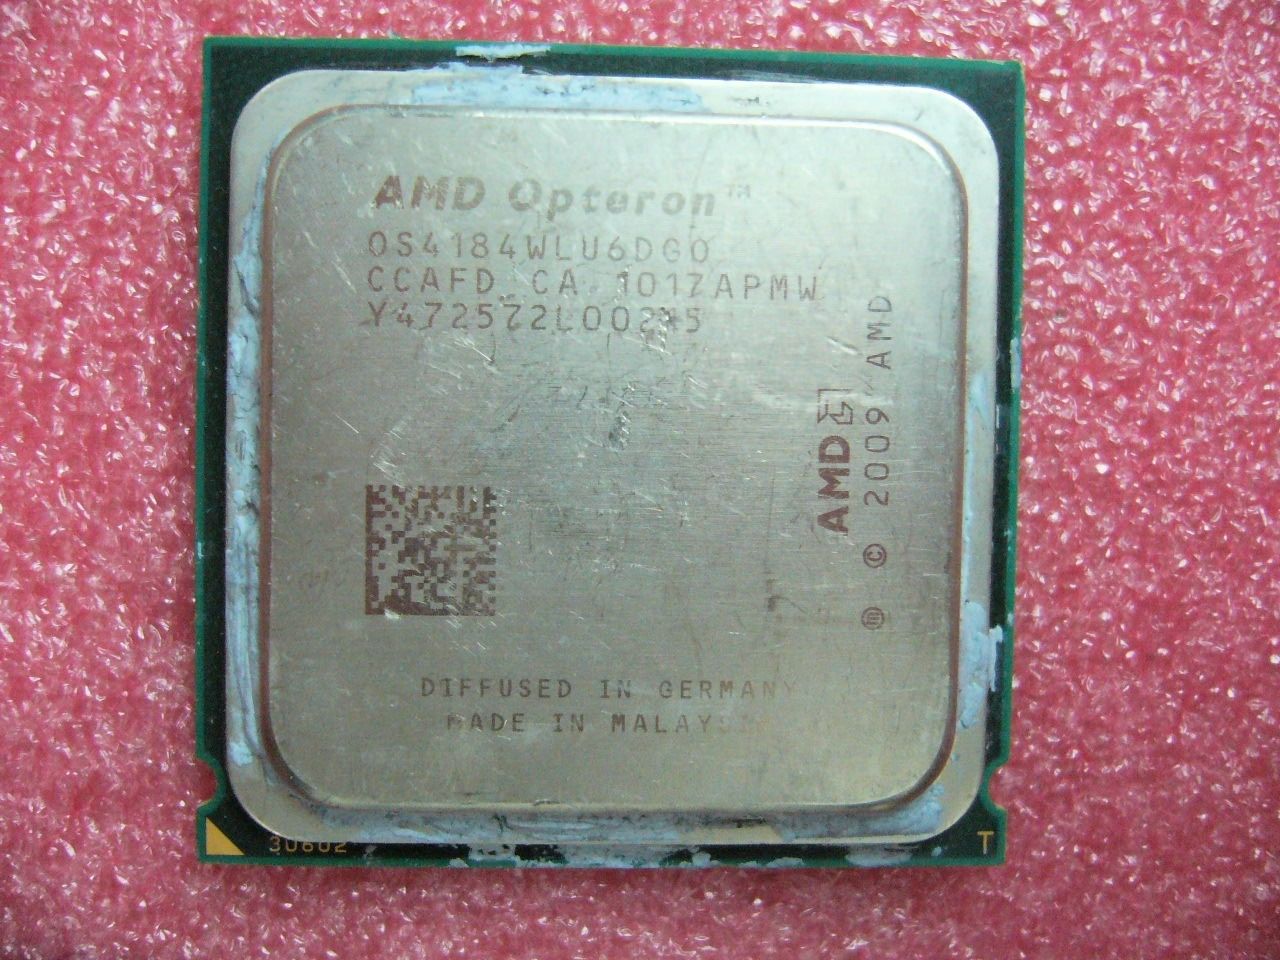 QTY 1x AMD Opteron 4184 2.8 GHz Six Core (OS4184WLU6DGO) CPU Socket C32 - zum Schließen ins Bild klicken